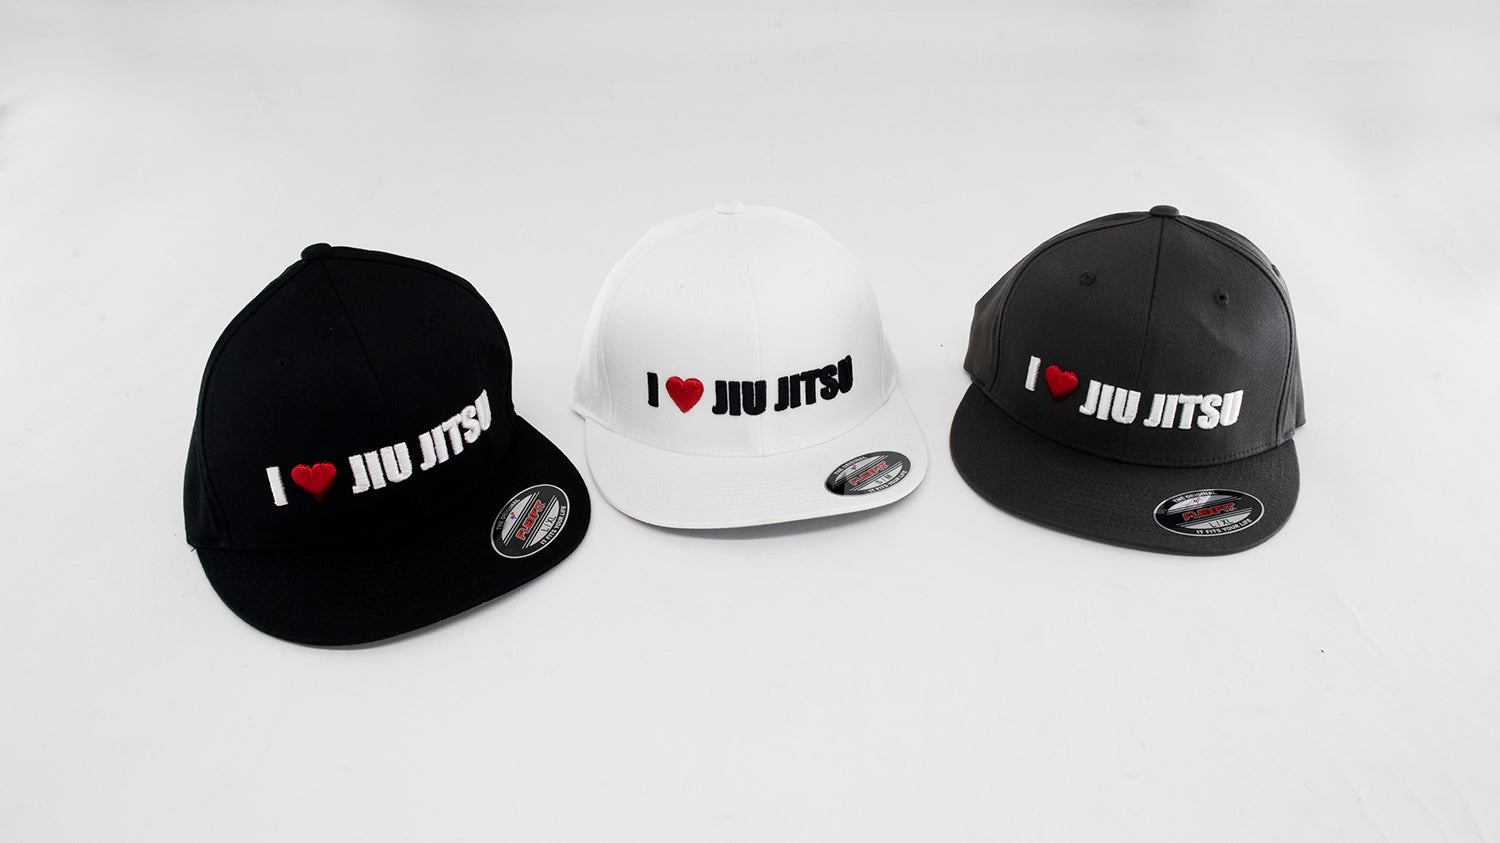 – Fit Jitsu Jiu Heart Hats I Genuine Flex